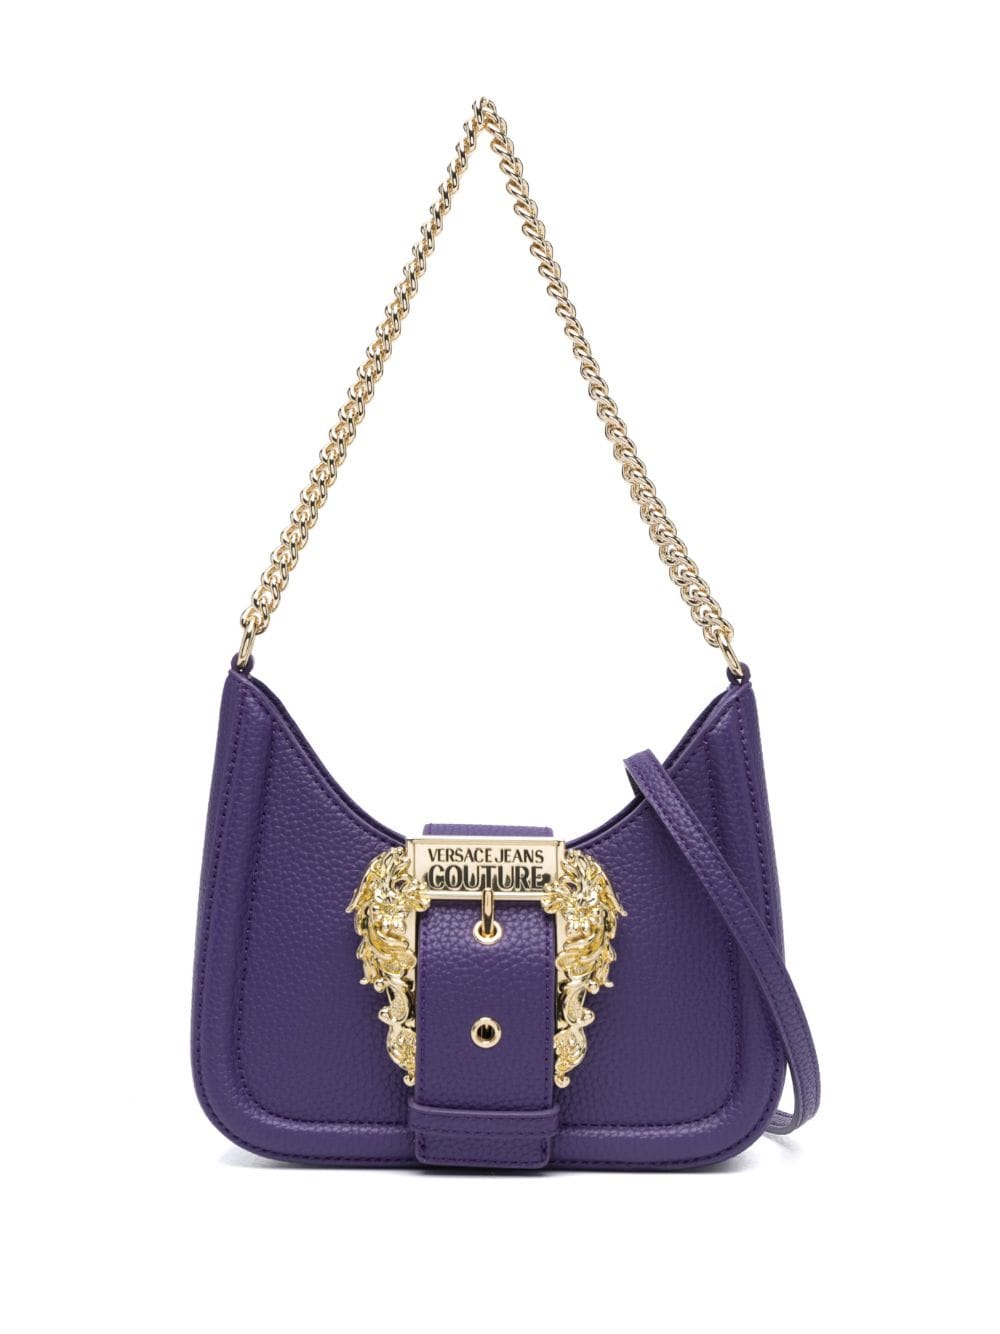 Versace Jeans Couture Couture shoulder bag - Purple von Versace Jeans Couture